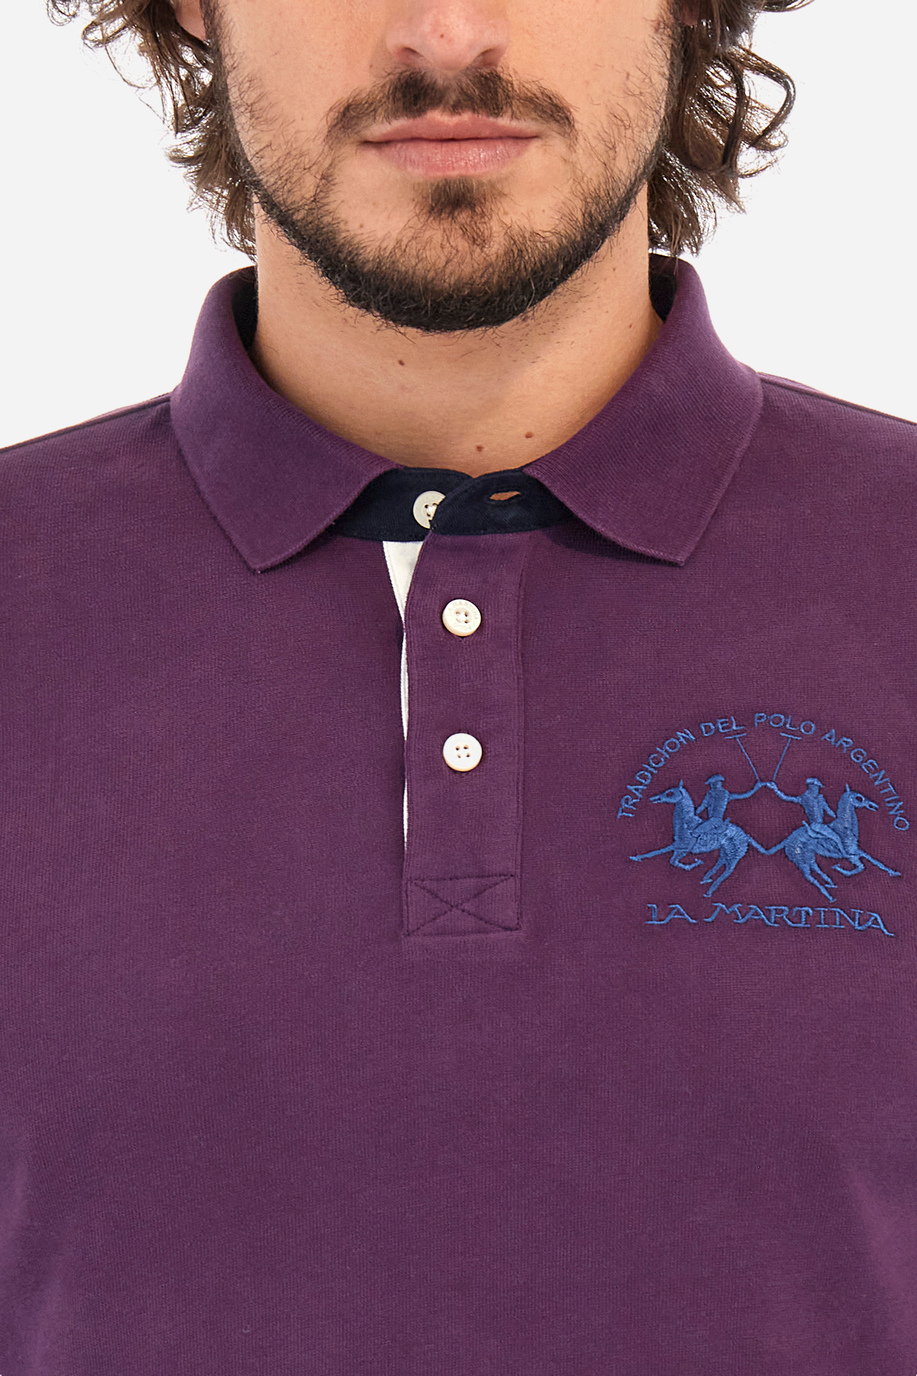 Man polo shirt in regular fit - Wilfredo - test 2 | La Martina - Official Online Shop